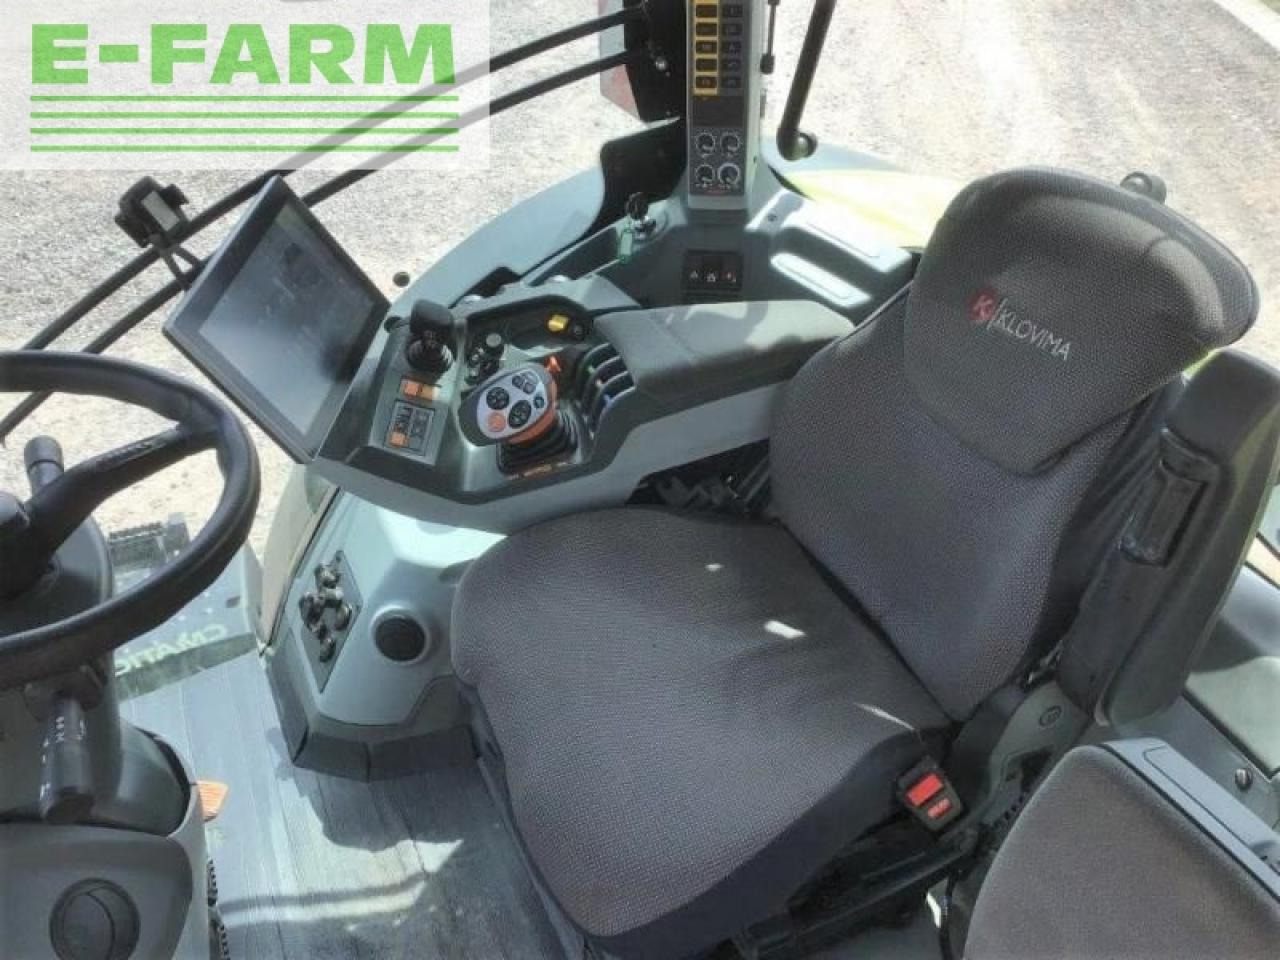 Farm tractor CLAAS axion 960 stage v